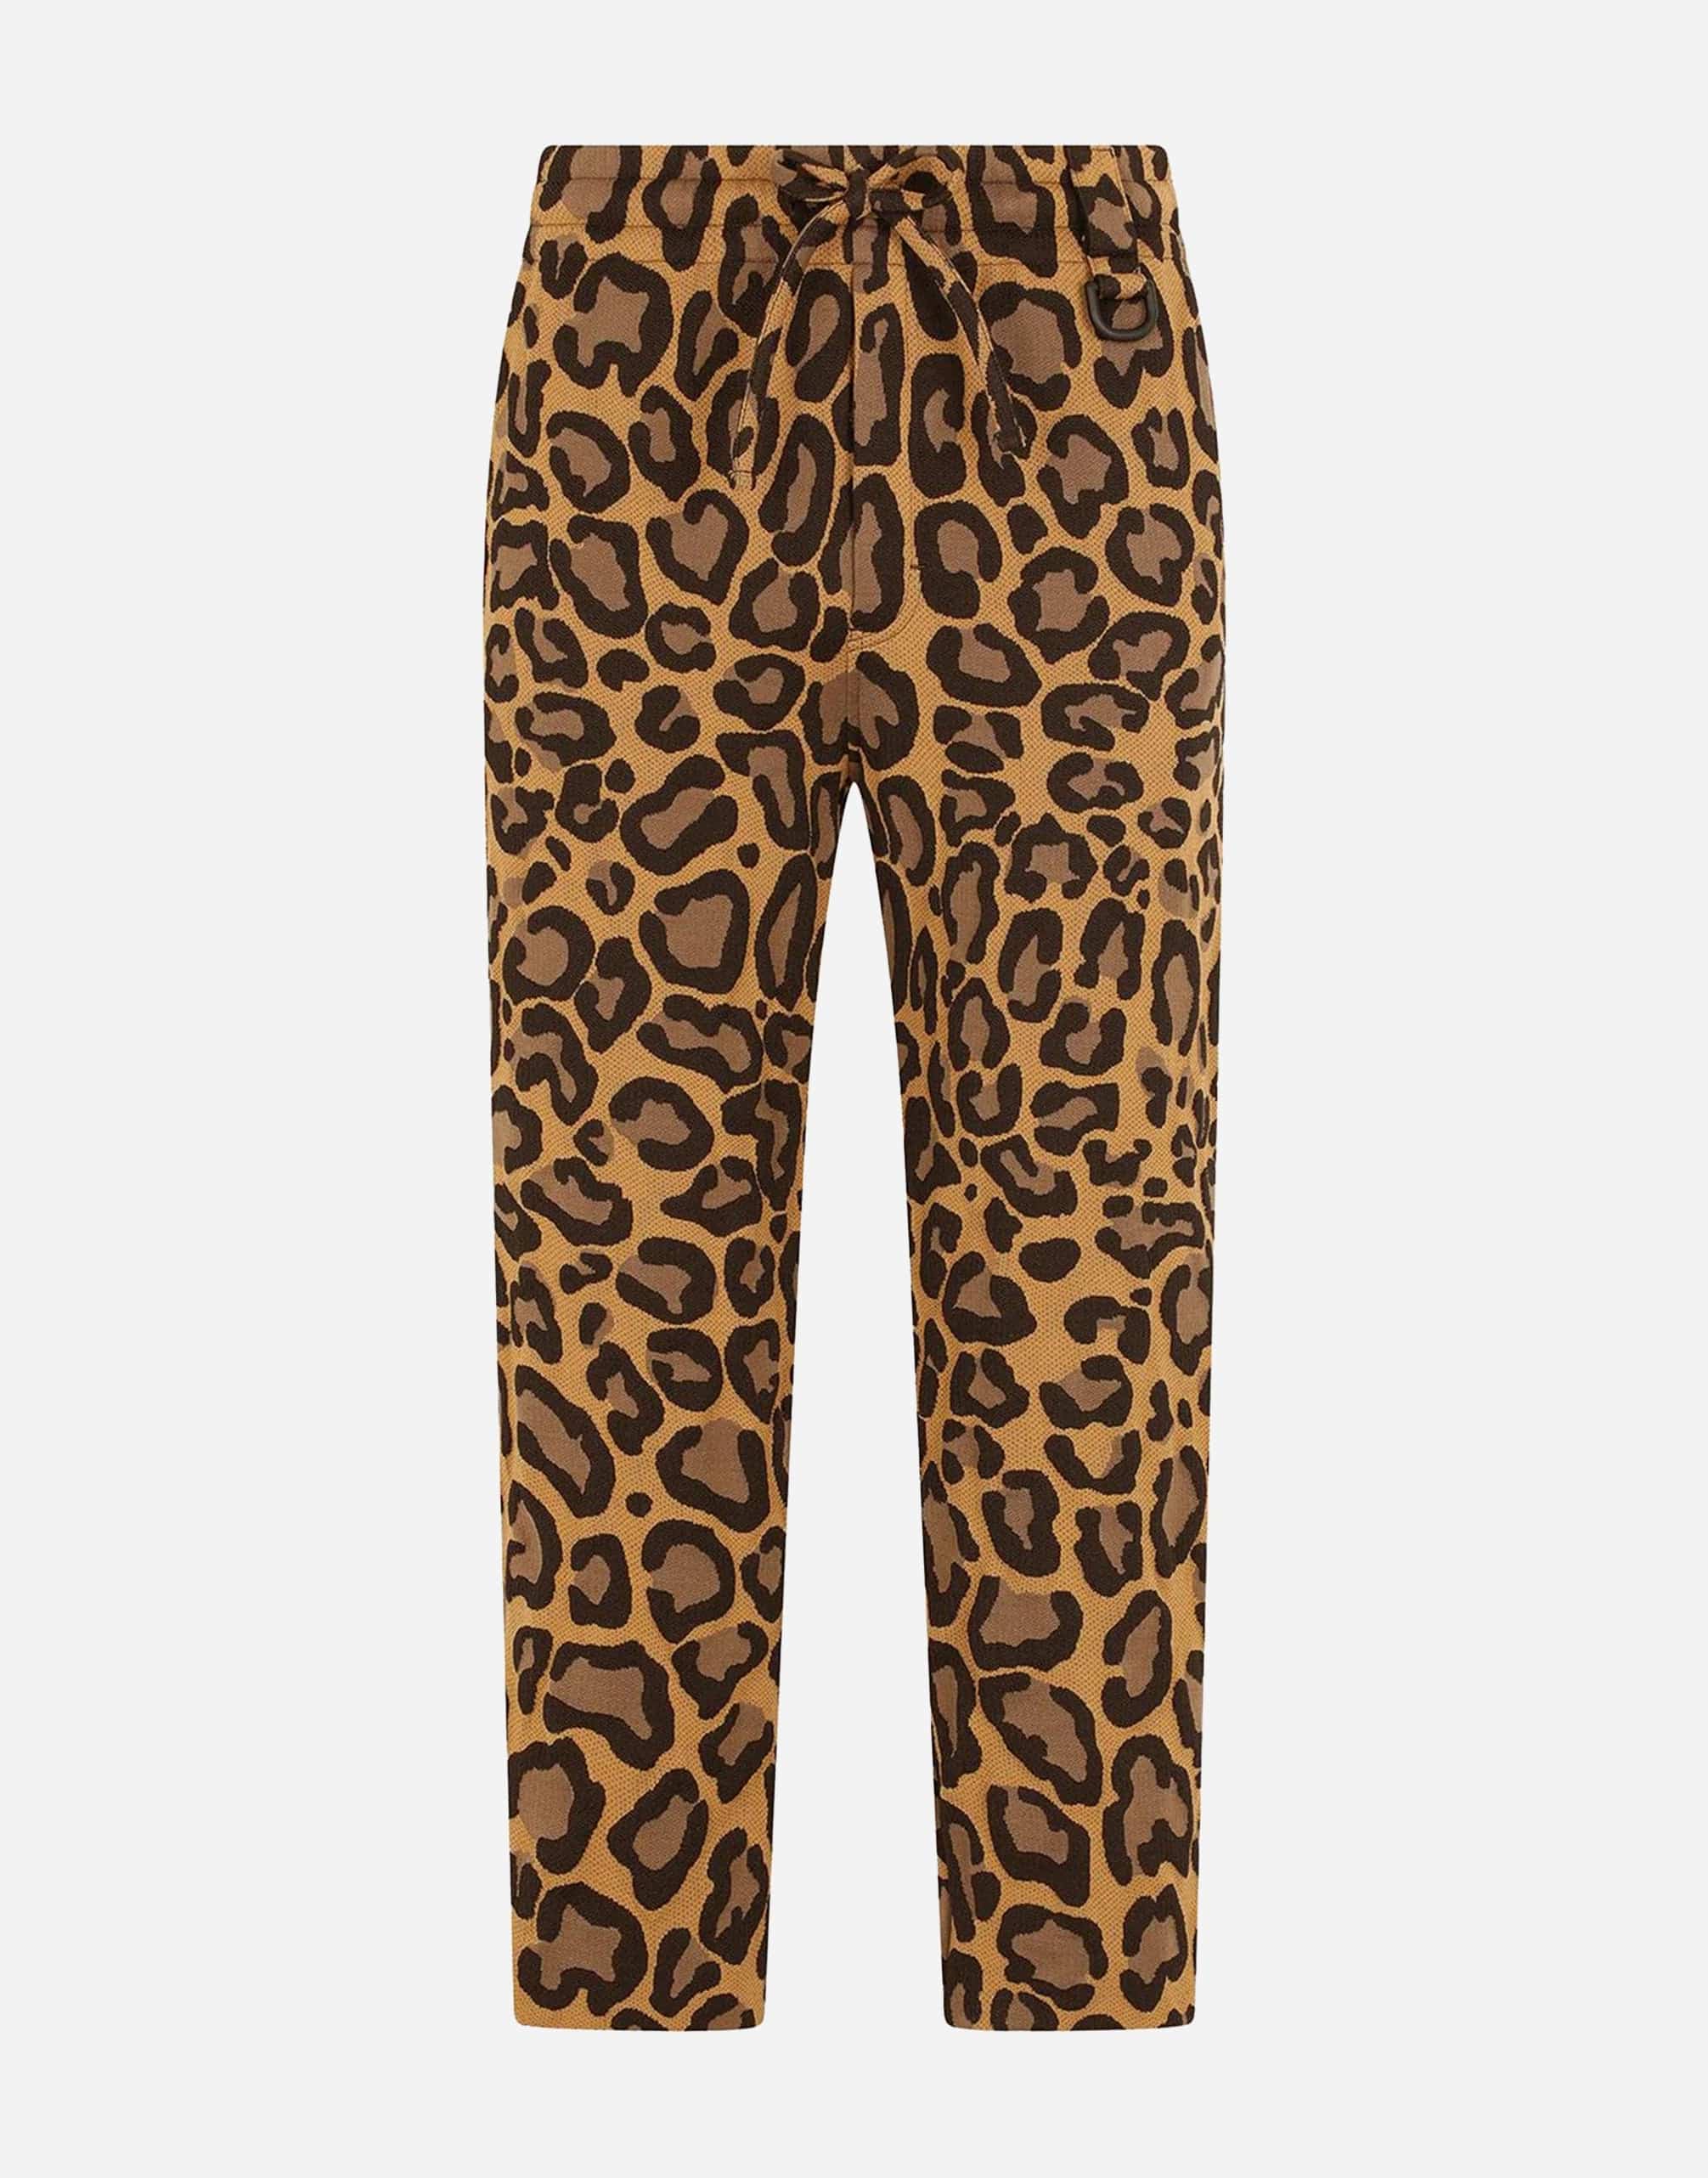 Jacquard Jogging Pants With Leopard Design